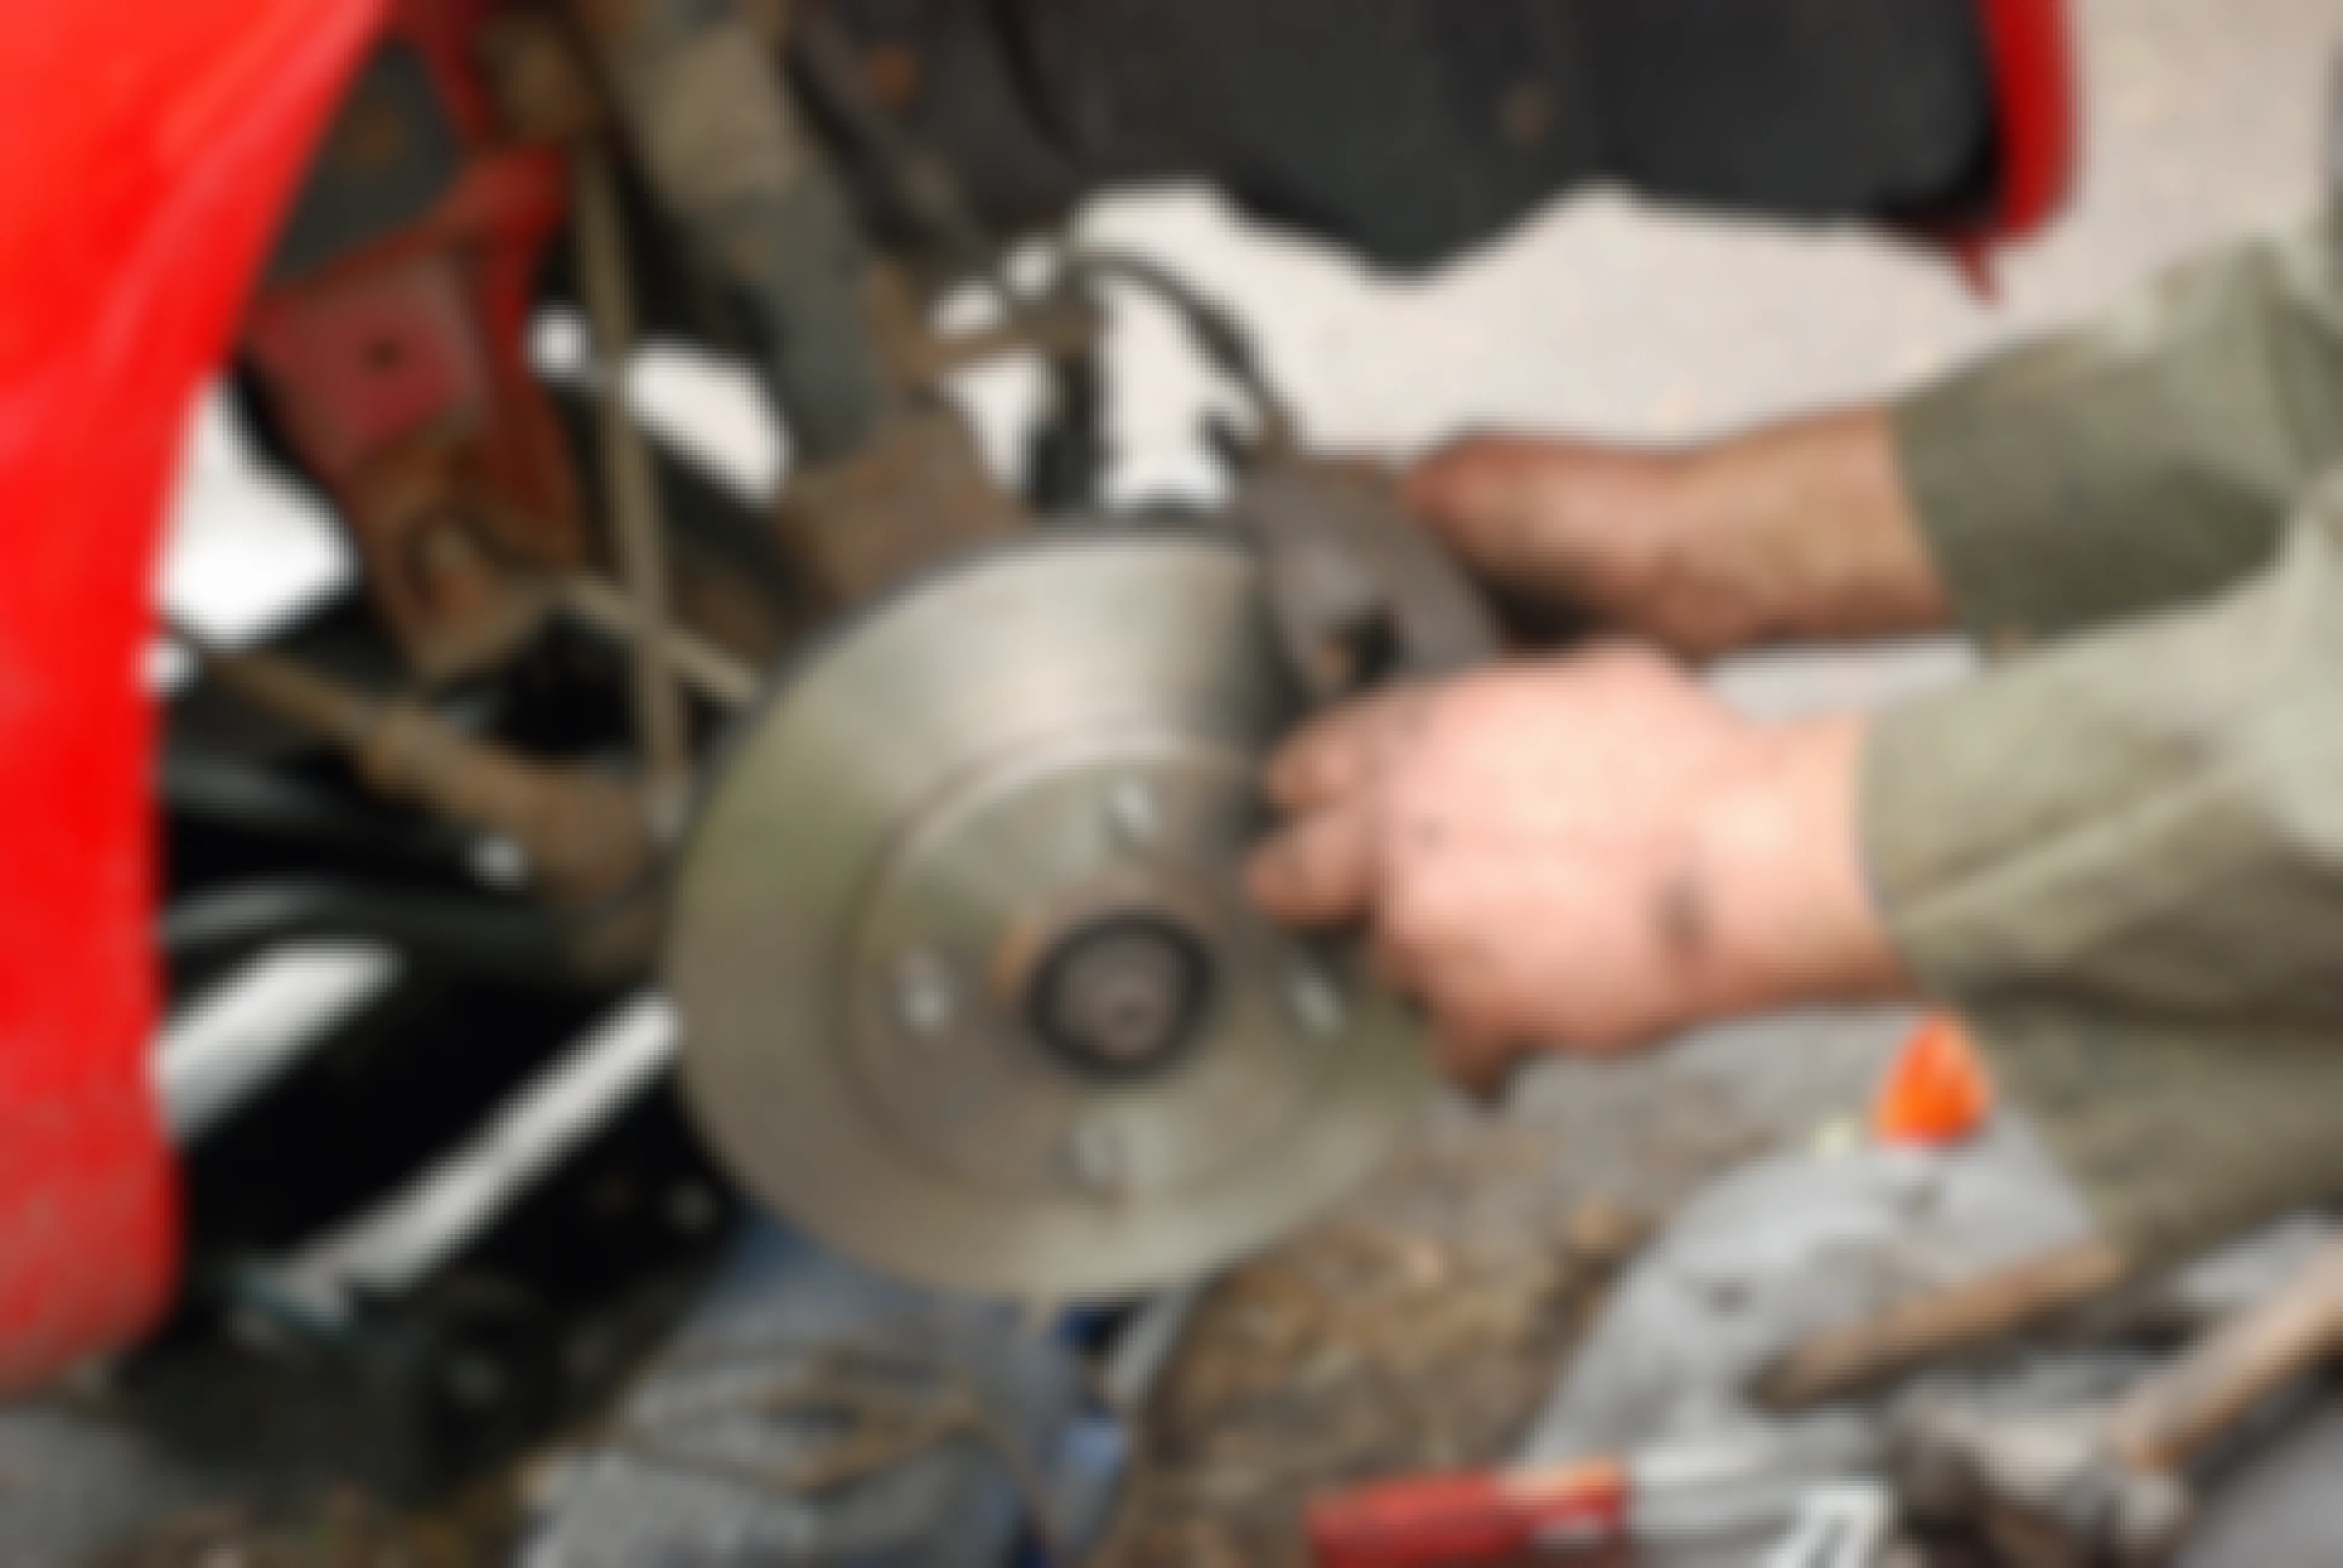 A mechanic repairing a car brake